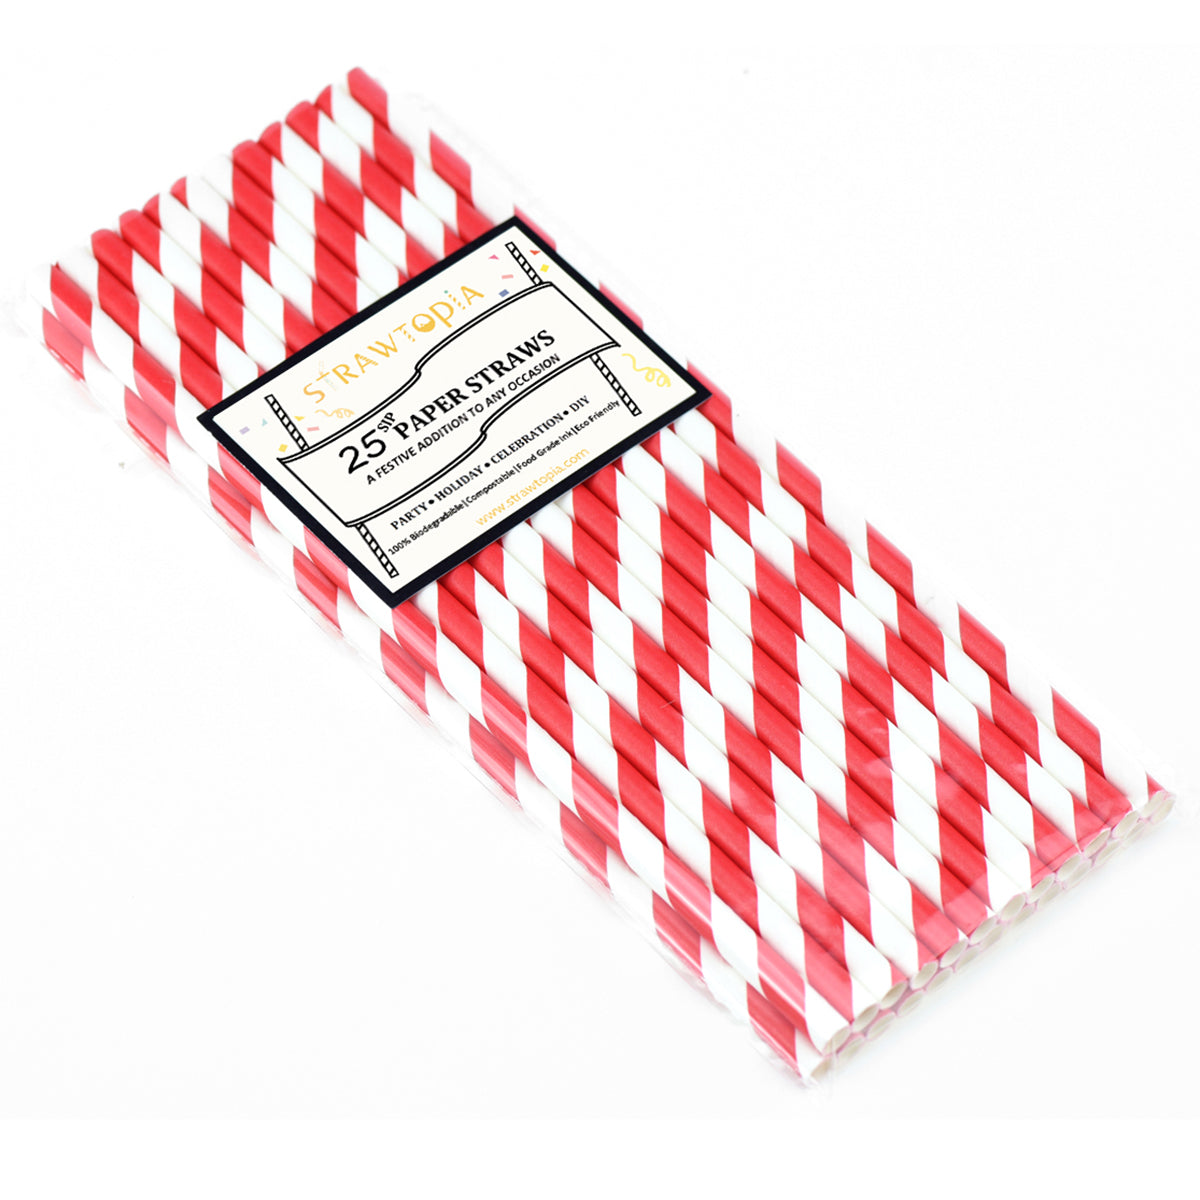 Red Cherry Paper Straws